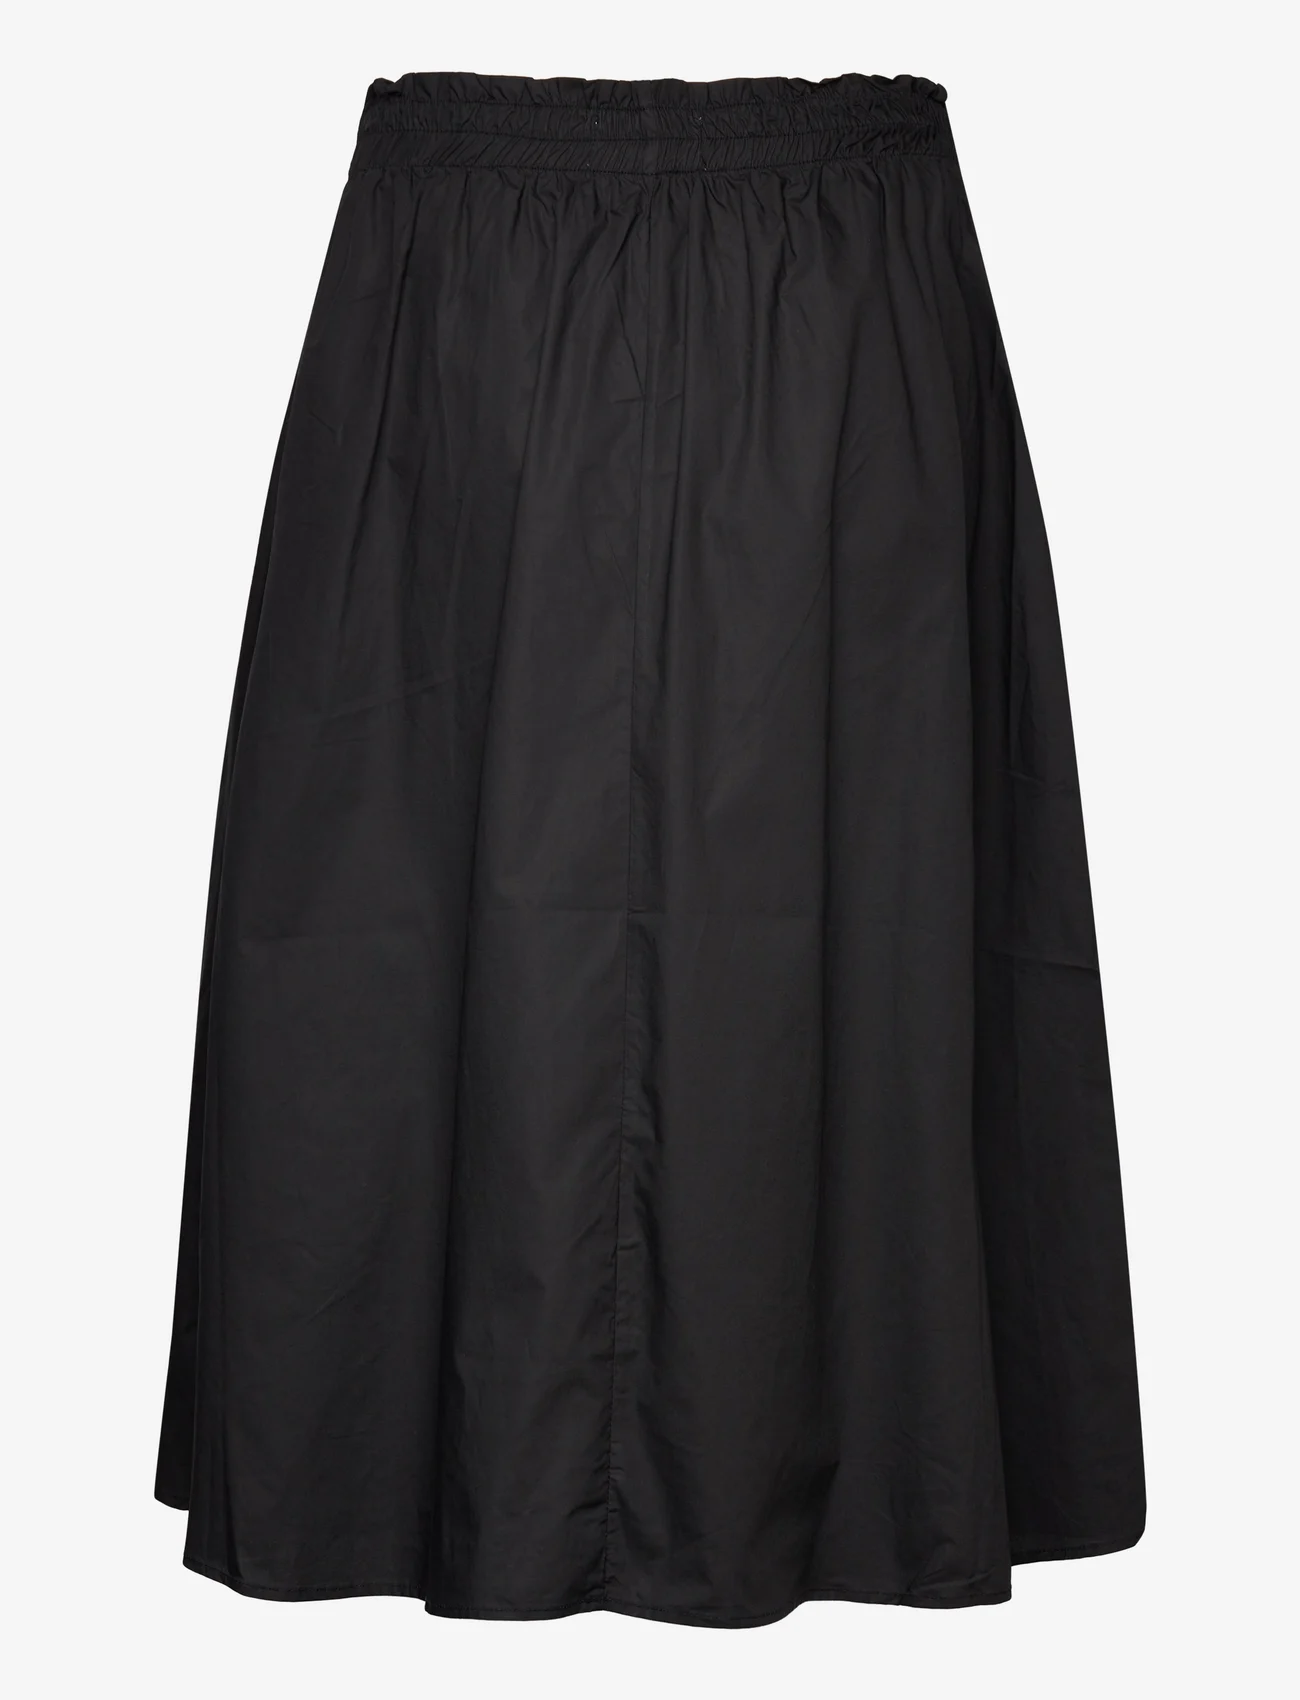 FREE/QUENT - FQMALAY-SKIRT - midi skirts - black - 1